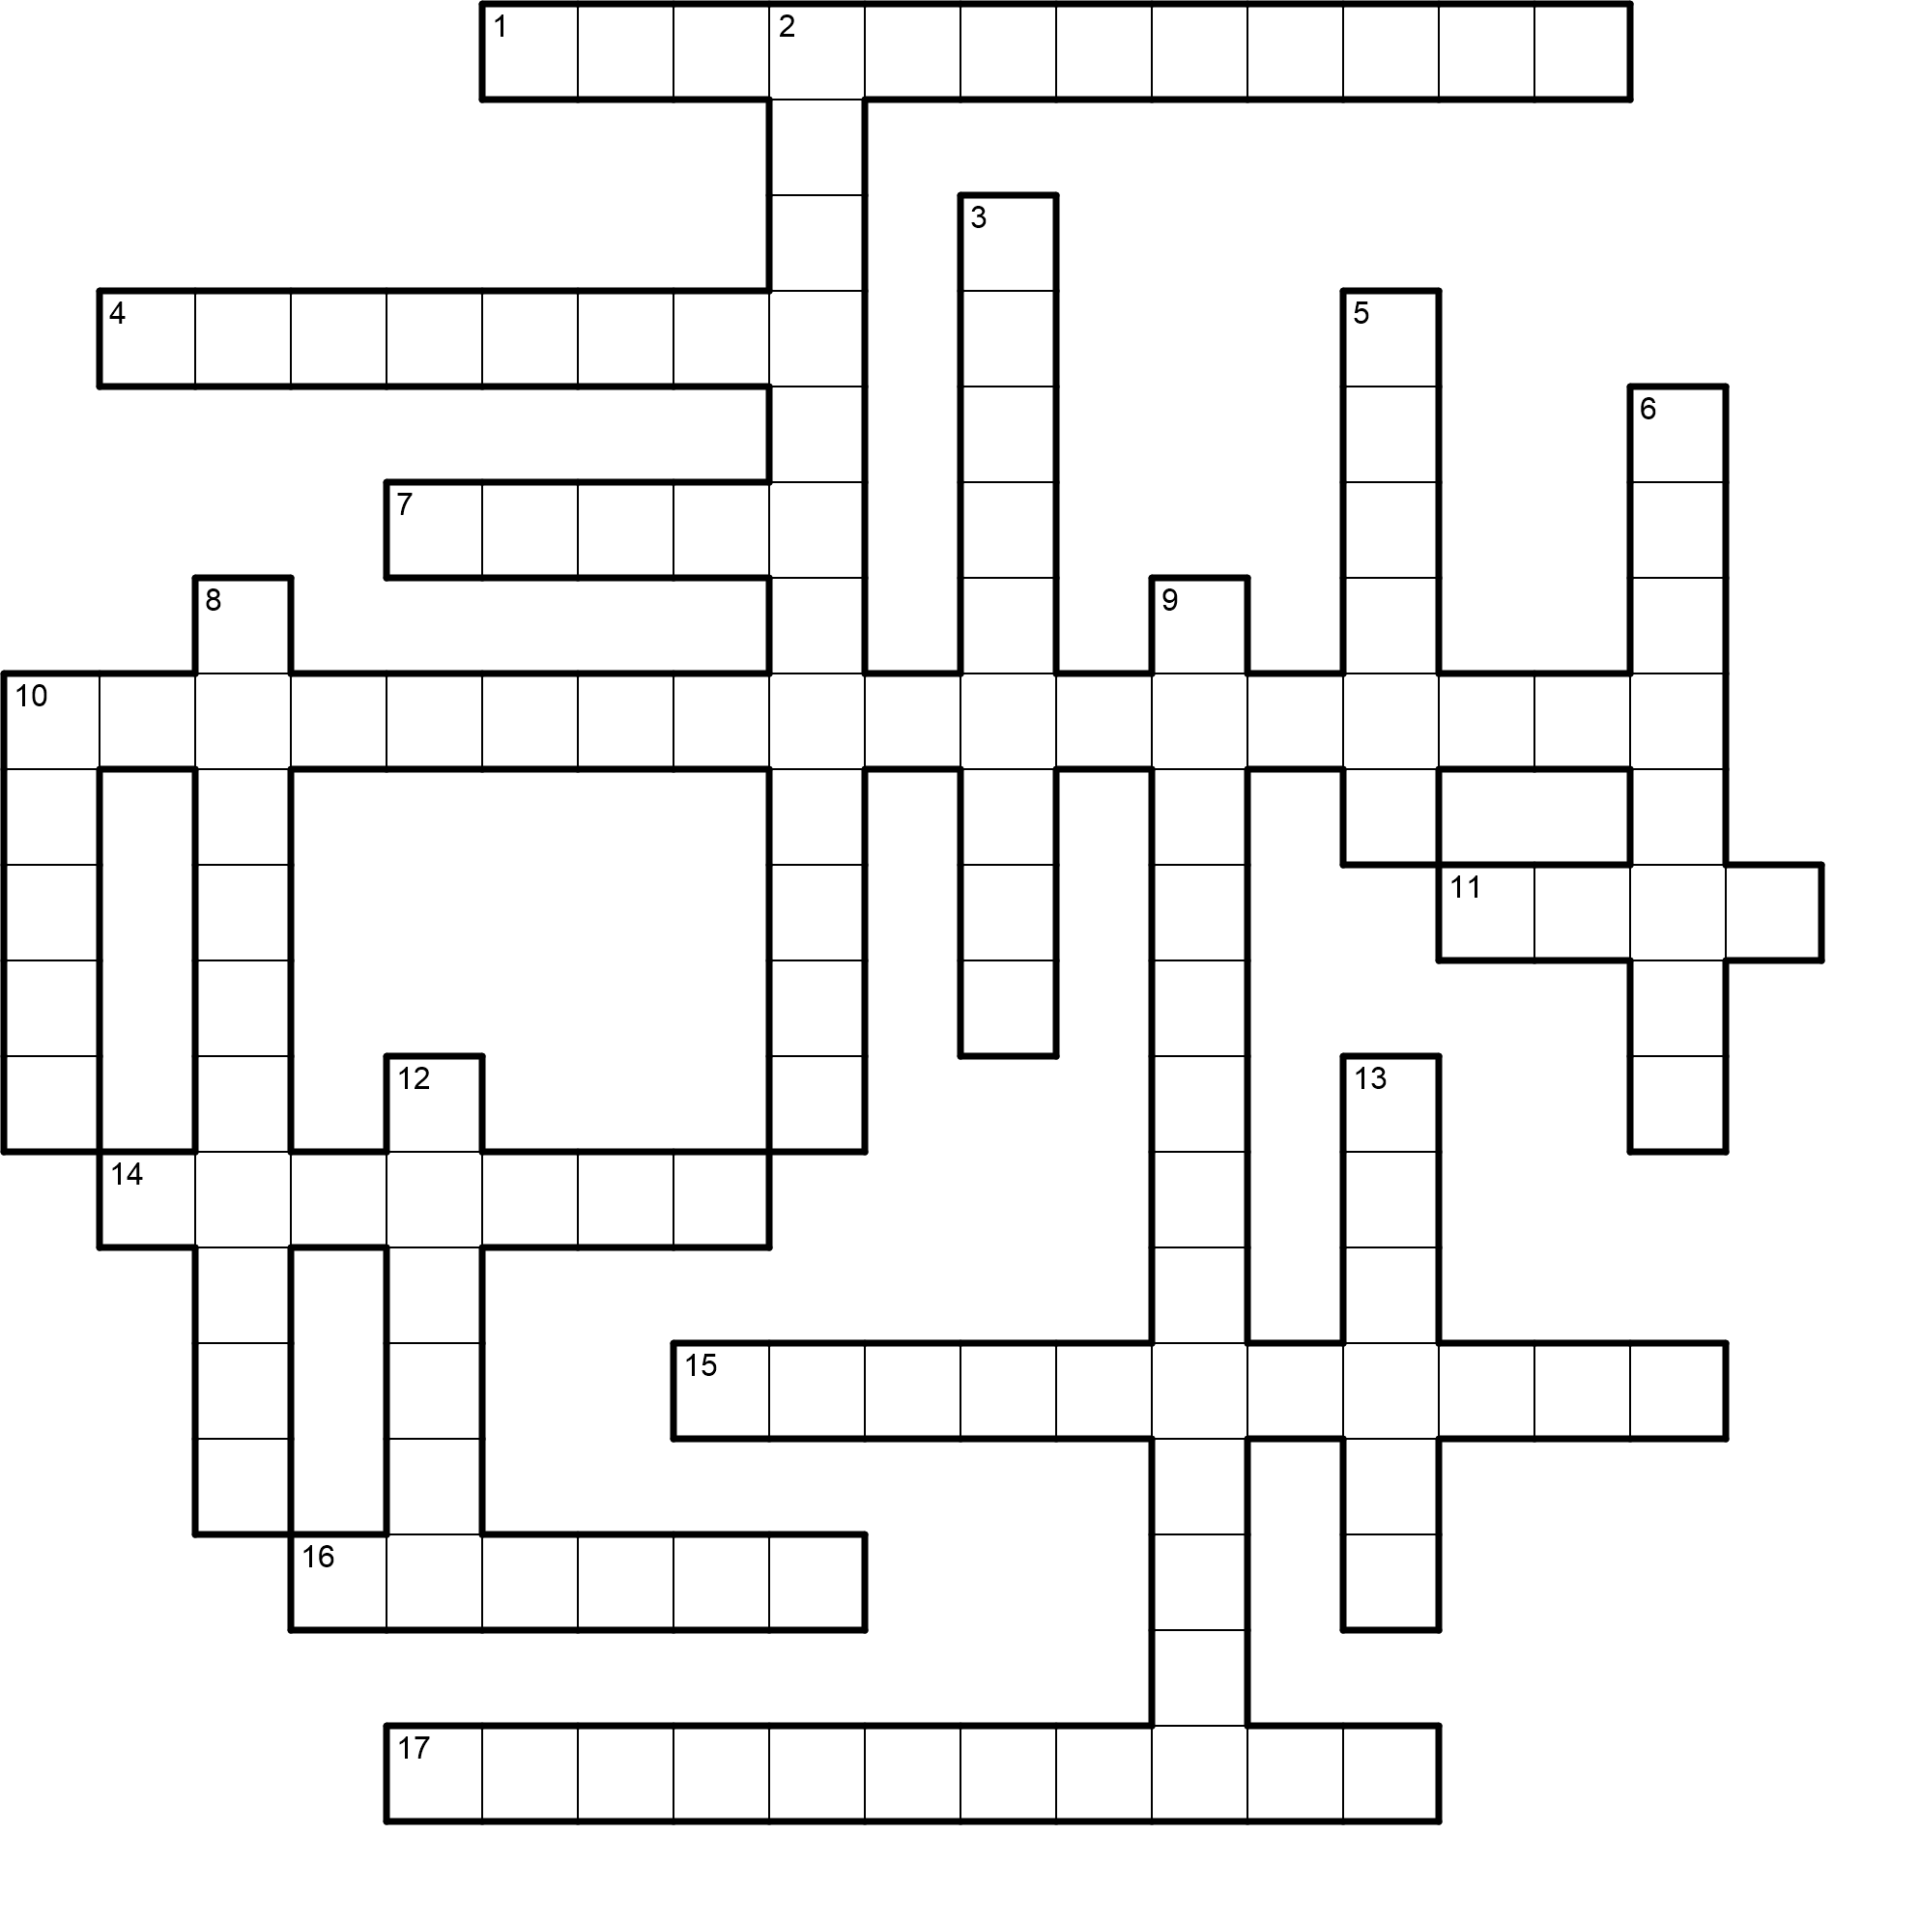 Criss Cross Puzzle Example